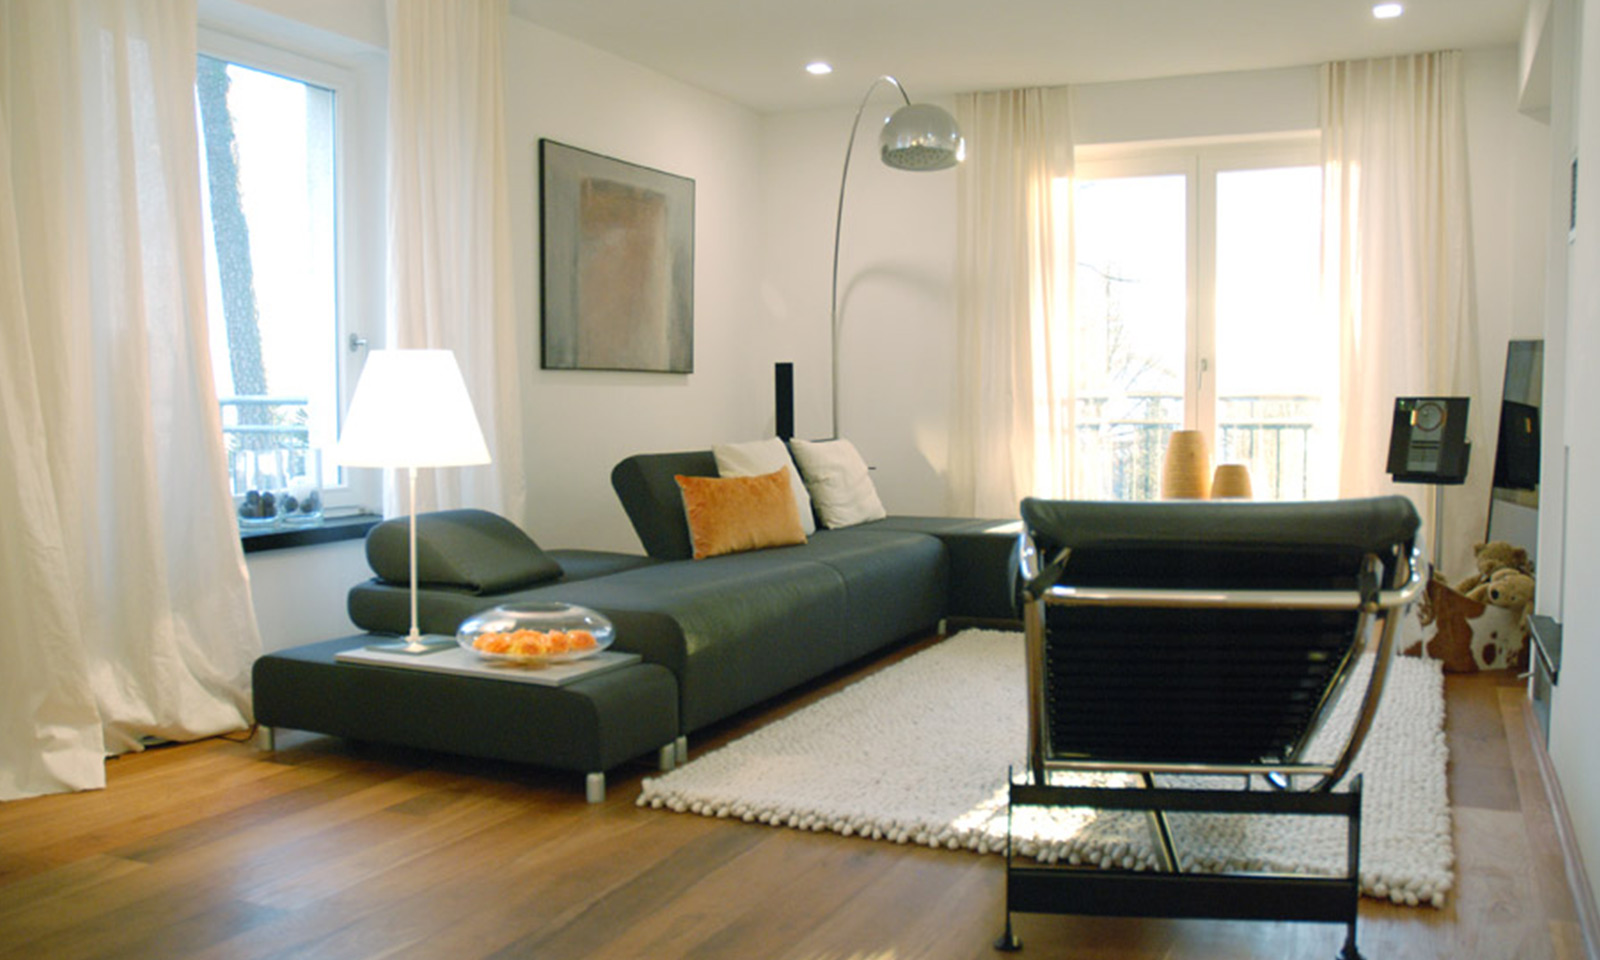 Open living level with TV corner, residential house Bad Soden